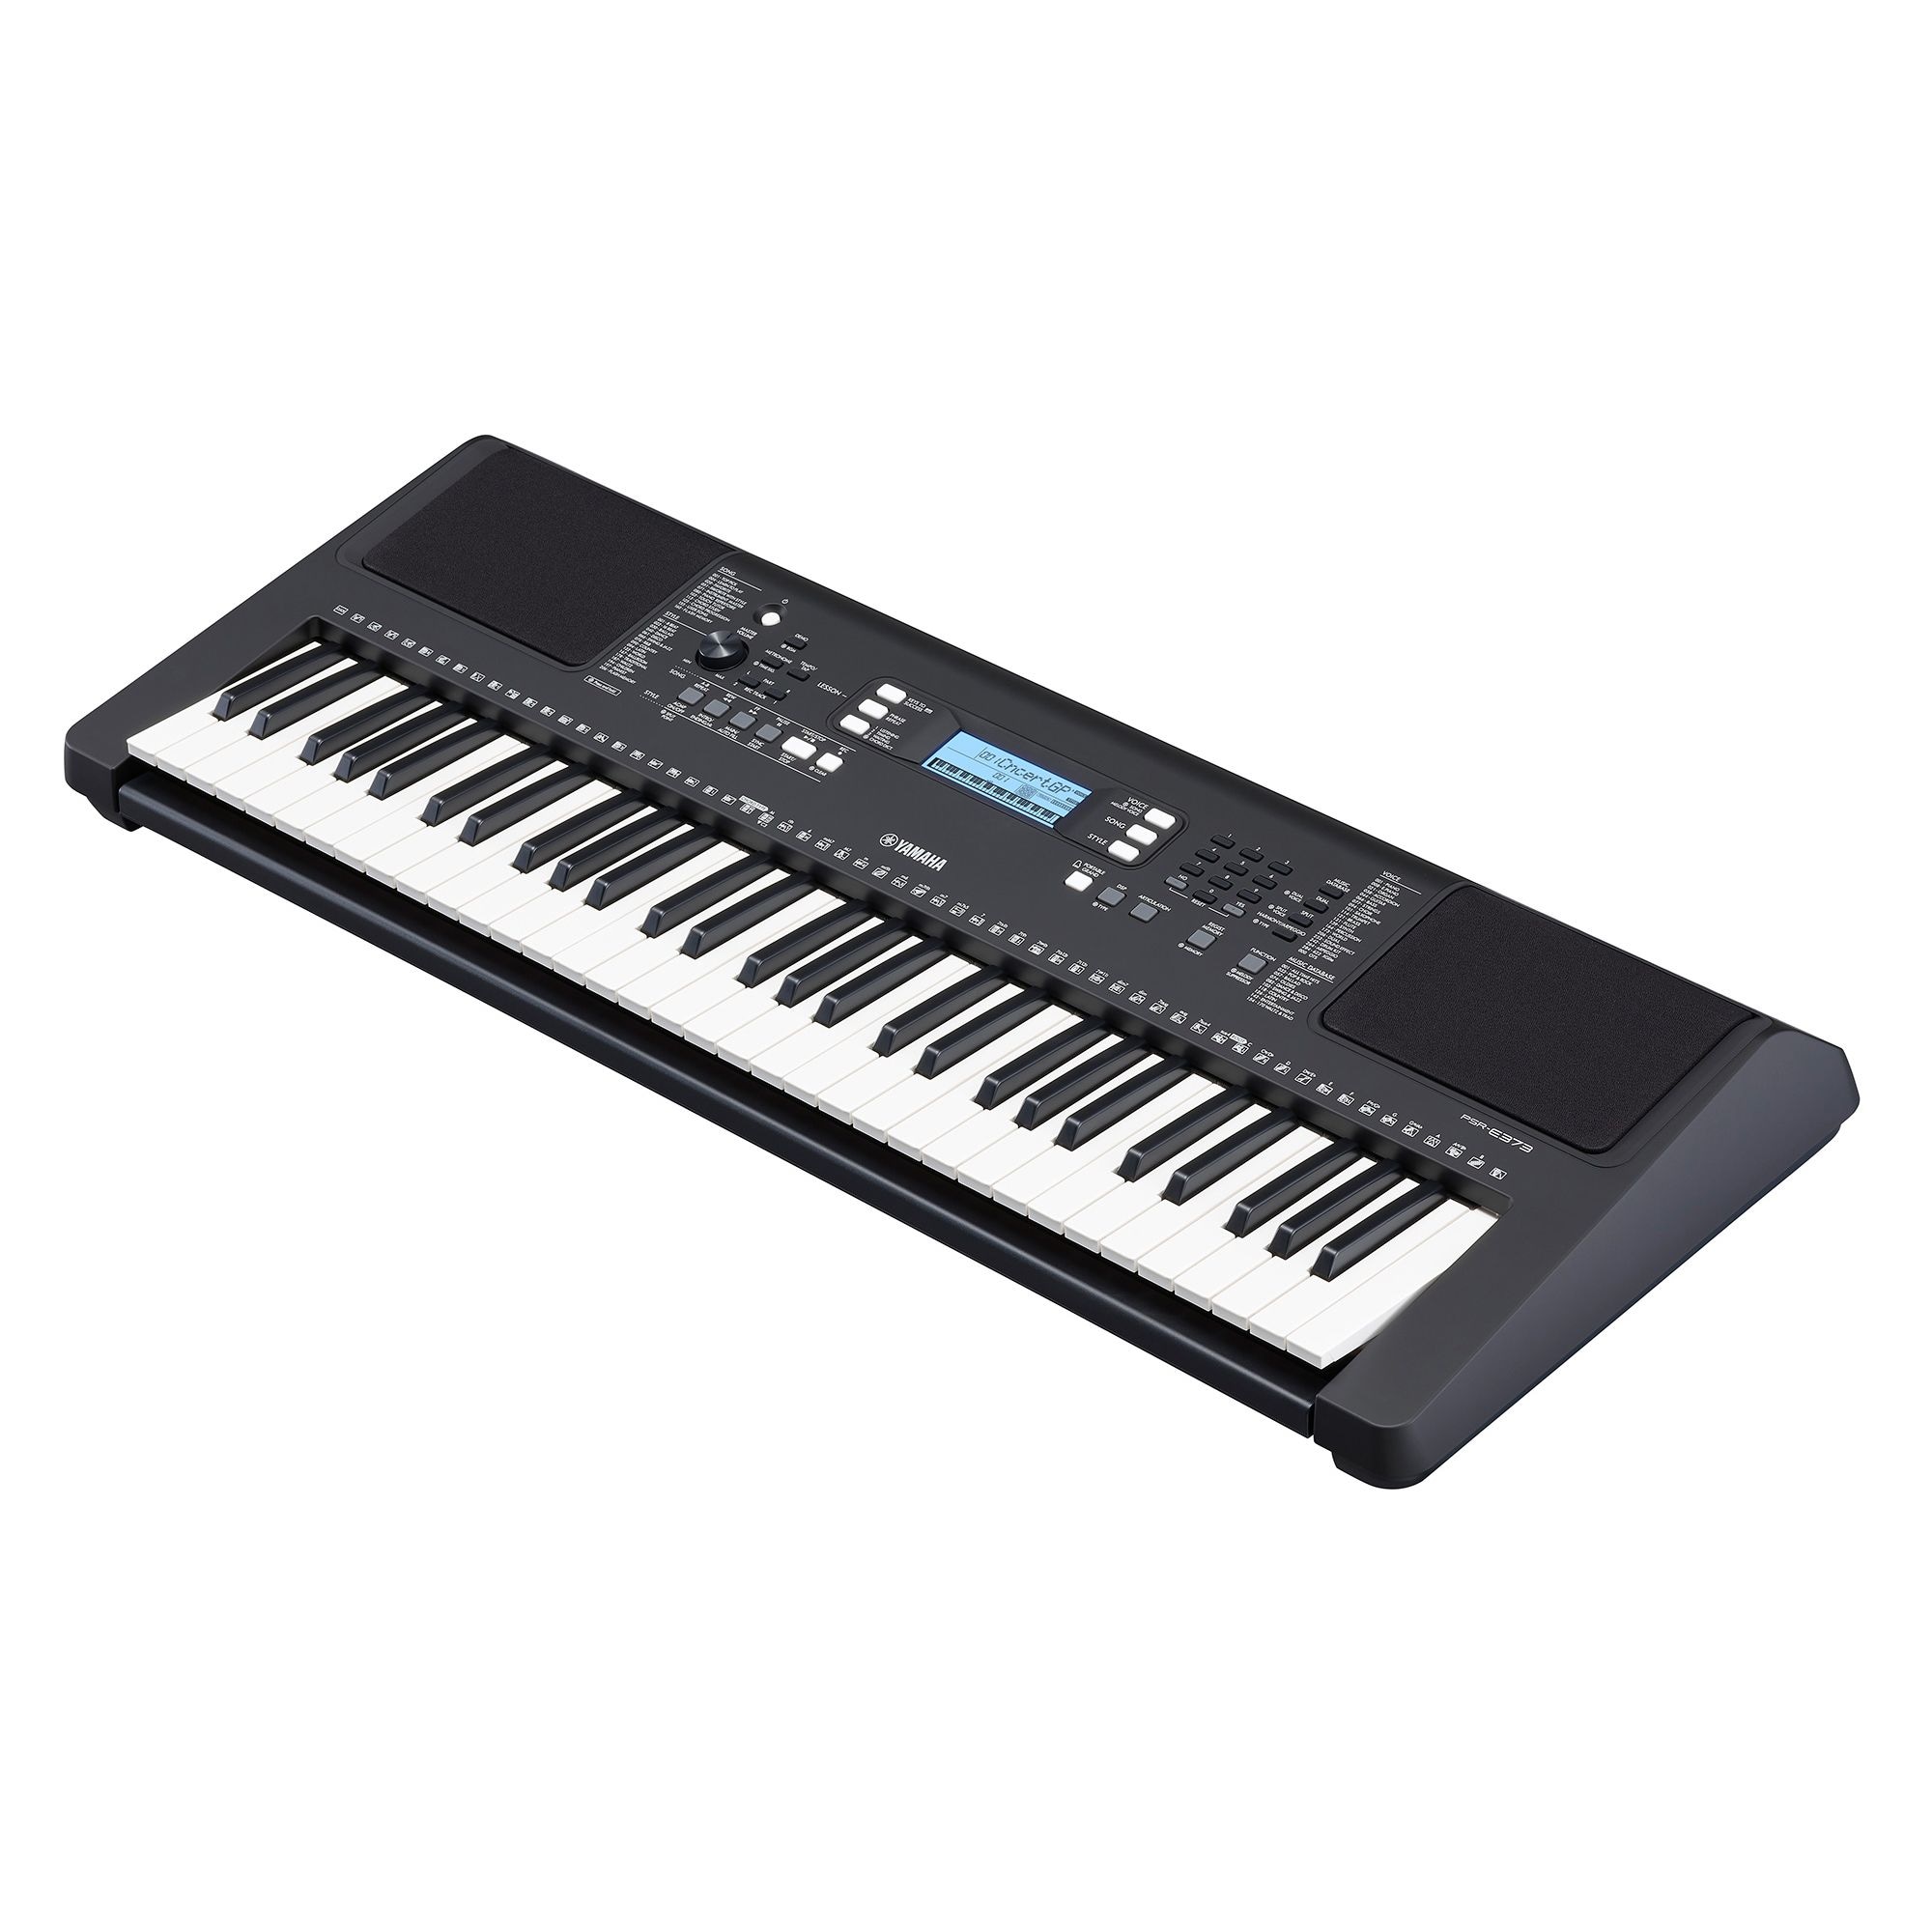 Portable Keyboards - Keyboard Instruments - Musical Instruments - Products  - Yamaha USA